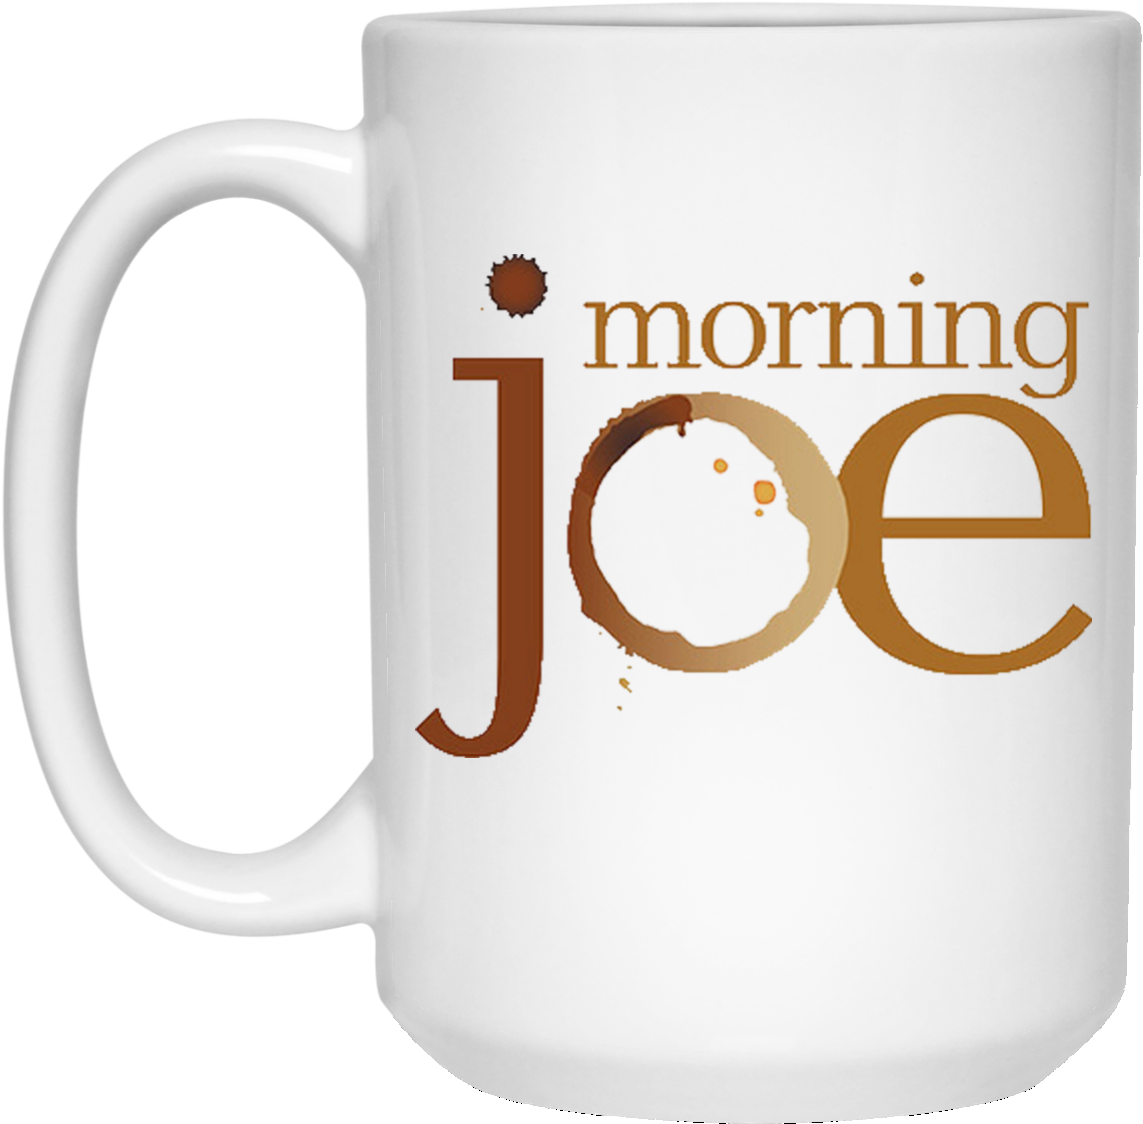 Morning Joe Coffee Mug Morning Joe Mugs On Coffee Bandit - Mug Dogs (1155x1155)